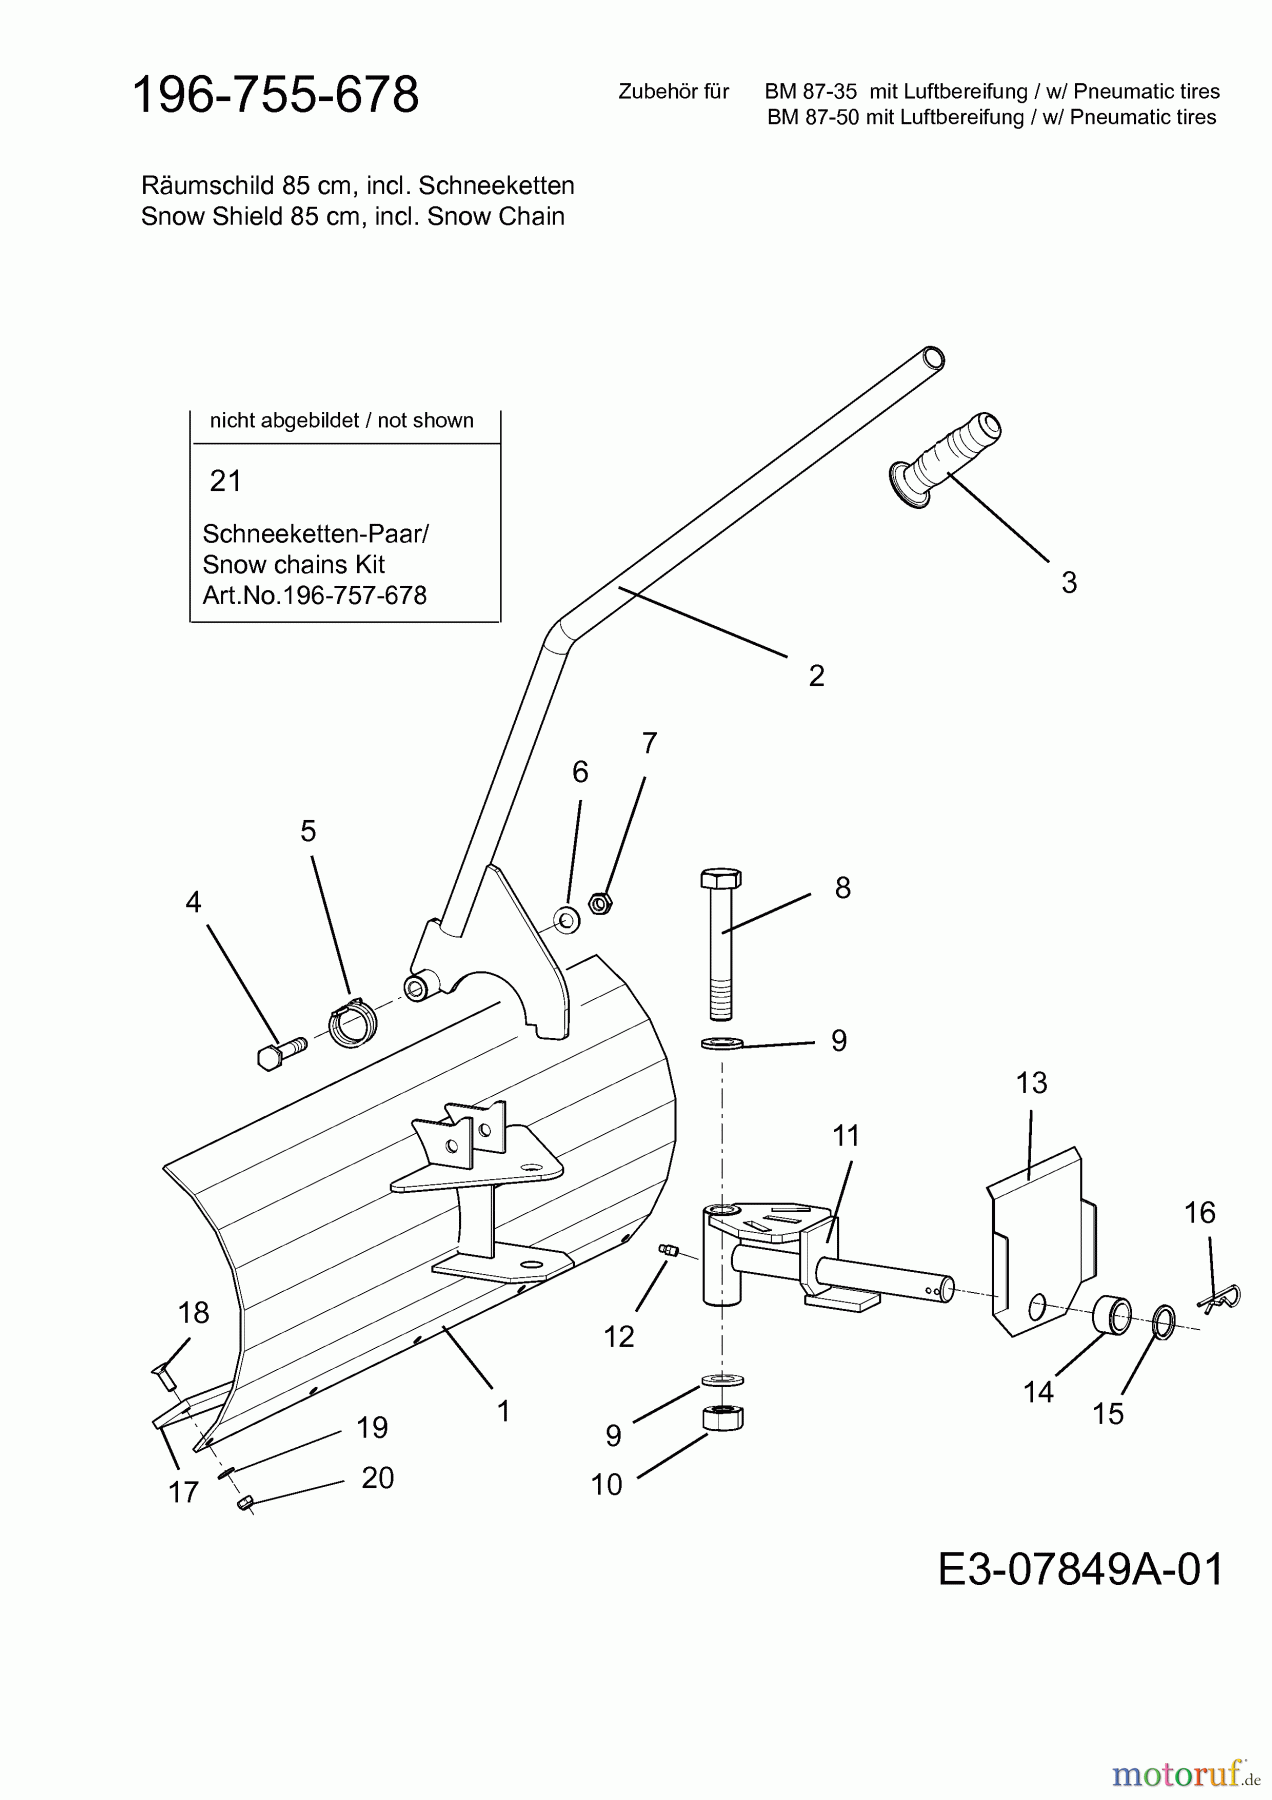  MTD Accessories Accessories cutterbar mower Snow blade for BM 87-35 196-755-678  (2013) Snowblade